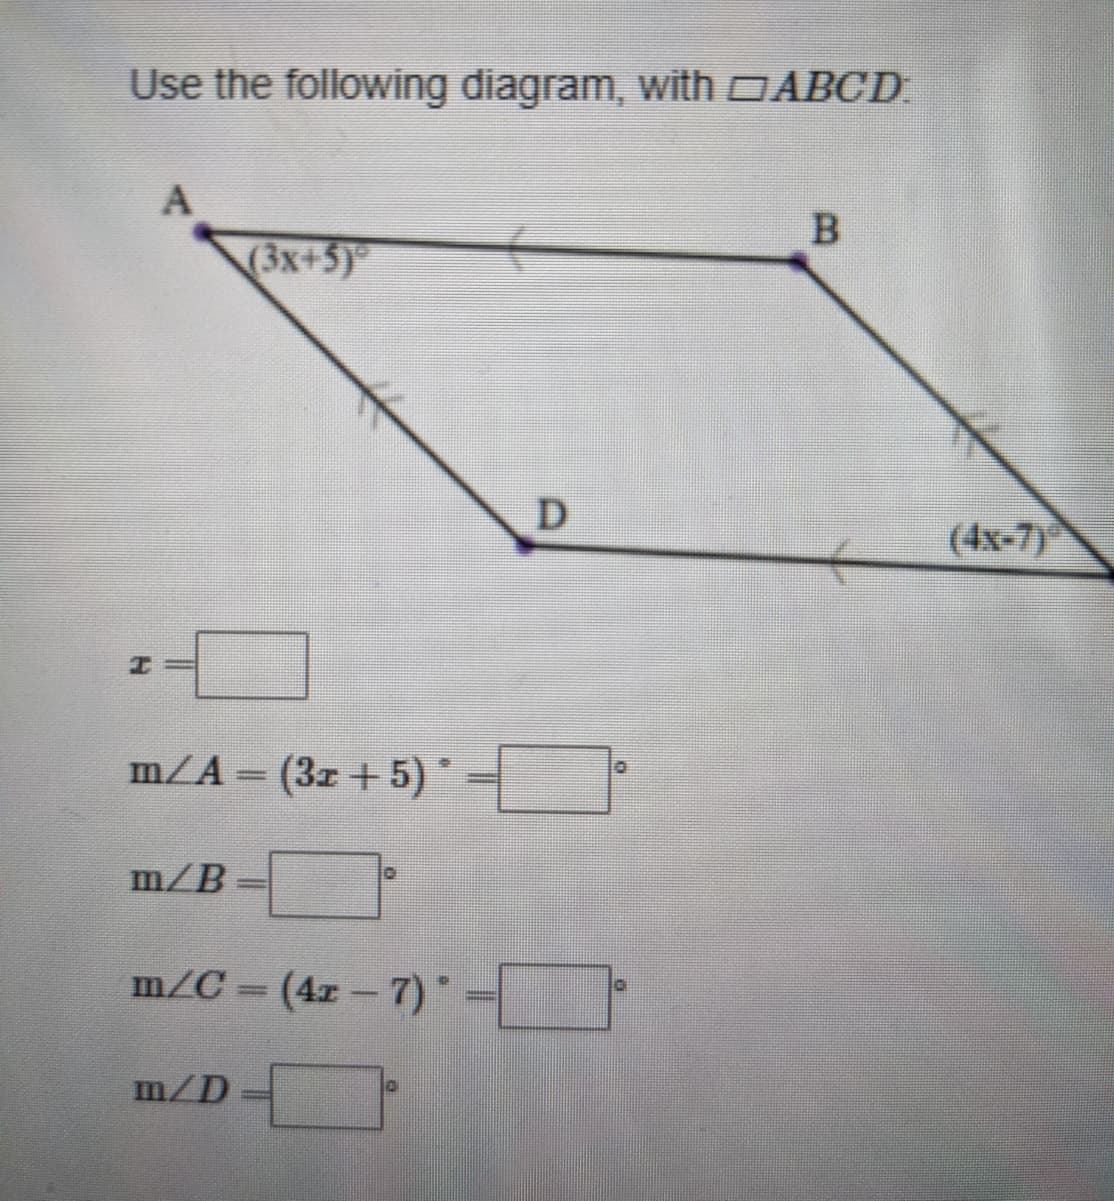 Use the following diagram, with DABCD
A
B
(3x+5)
D.
(4x-7)
m/A = (3z + 5)*
%3D
m/B
m/C (4x- 7)*3=
m/D
